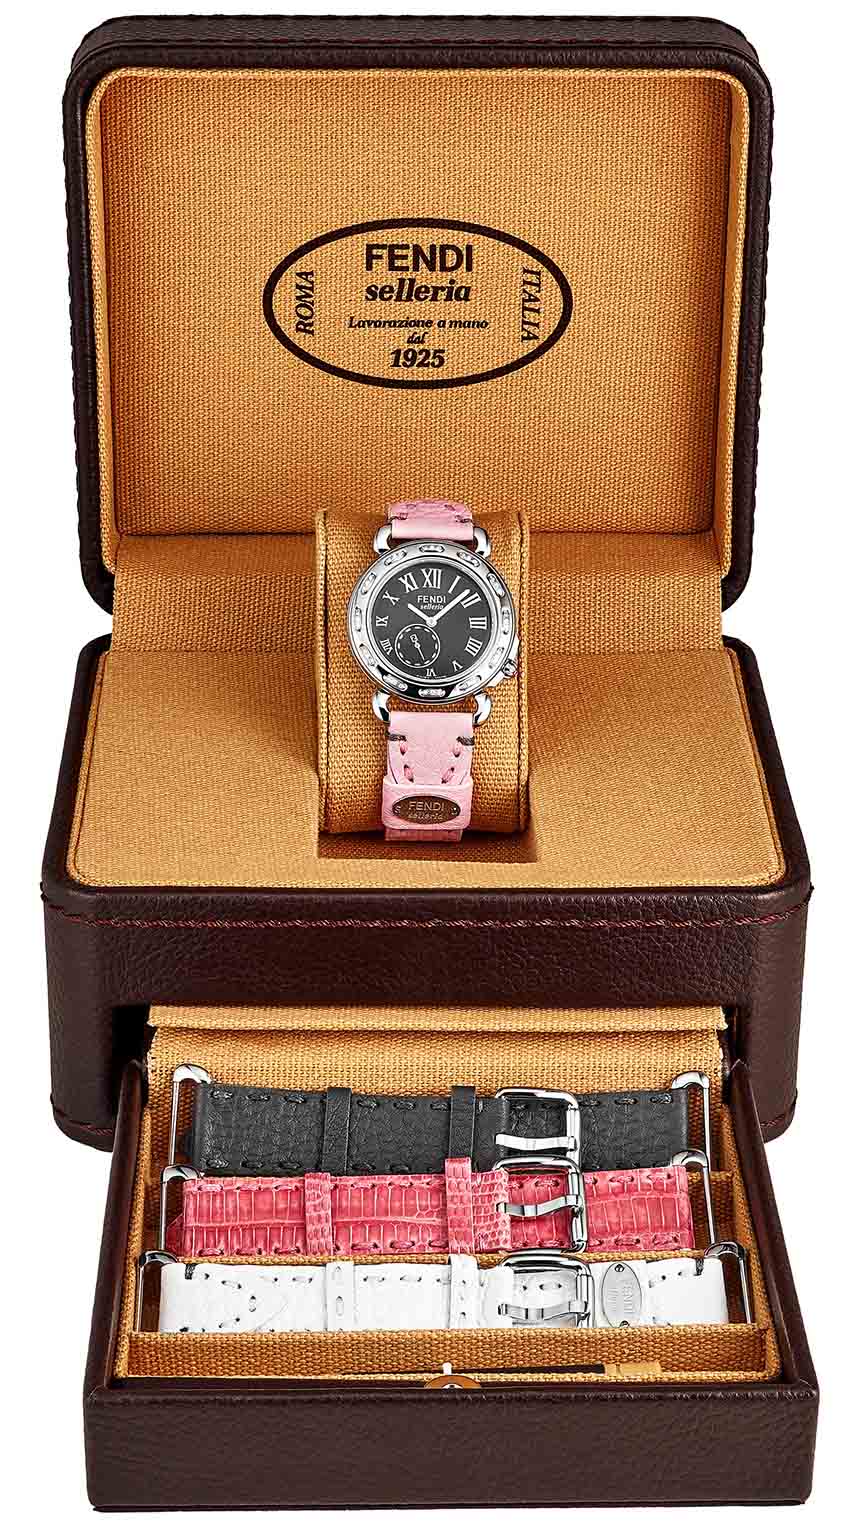 Fendi Selleria 3 Additional Straps Set With Ladies Watch Model ...